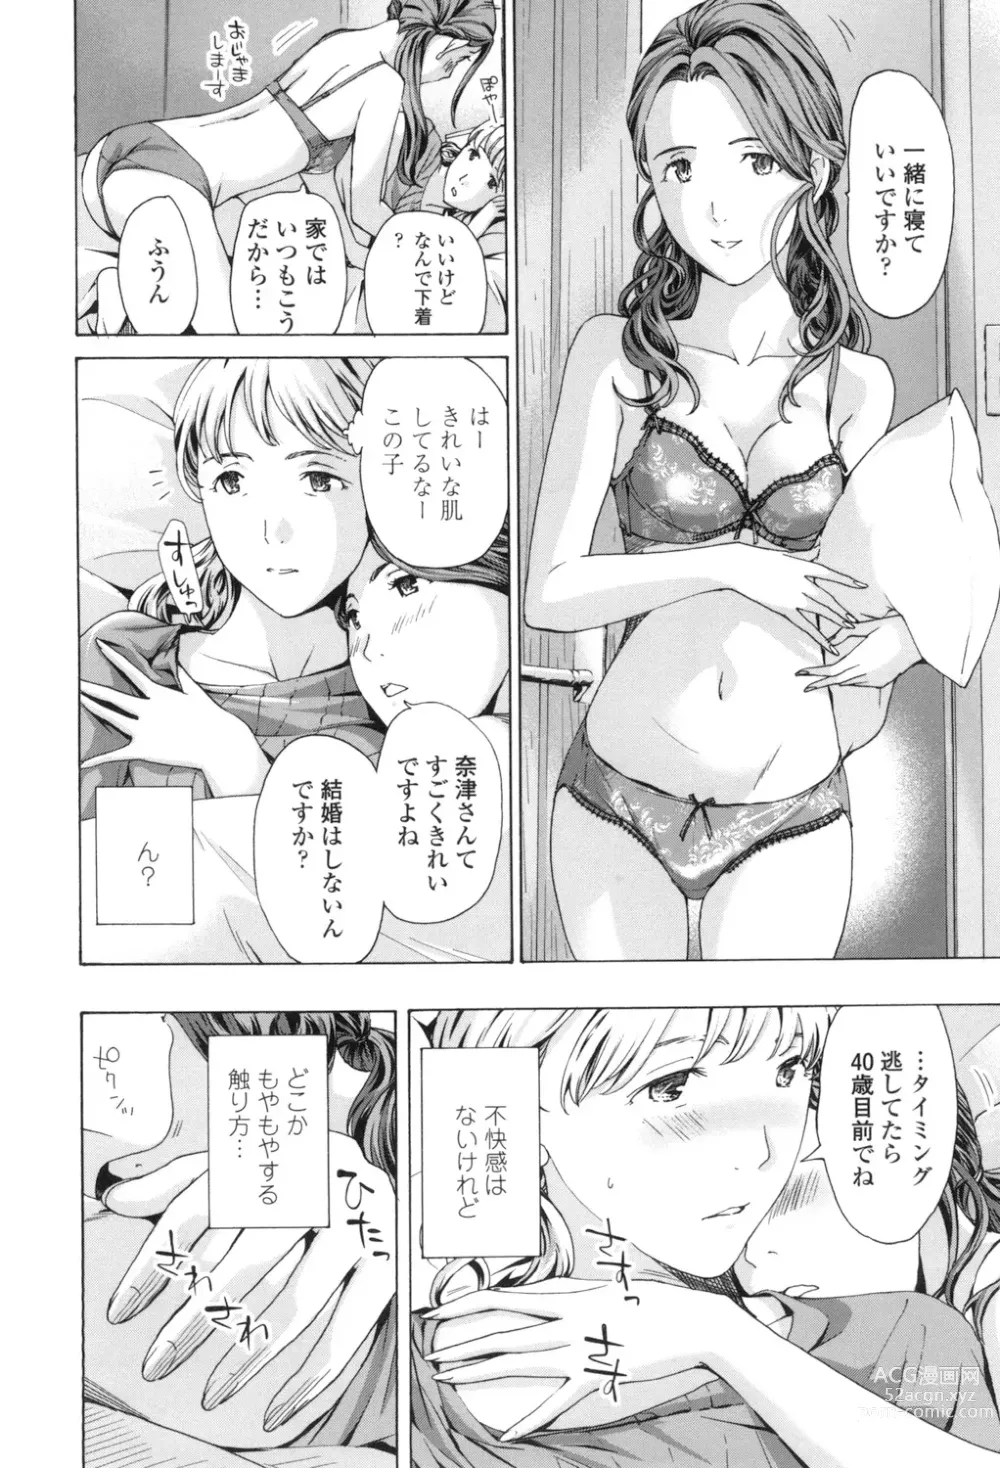 Page 8 of manga Girls Girls